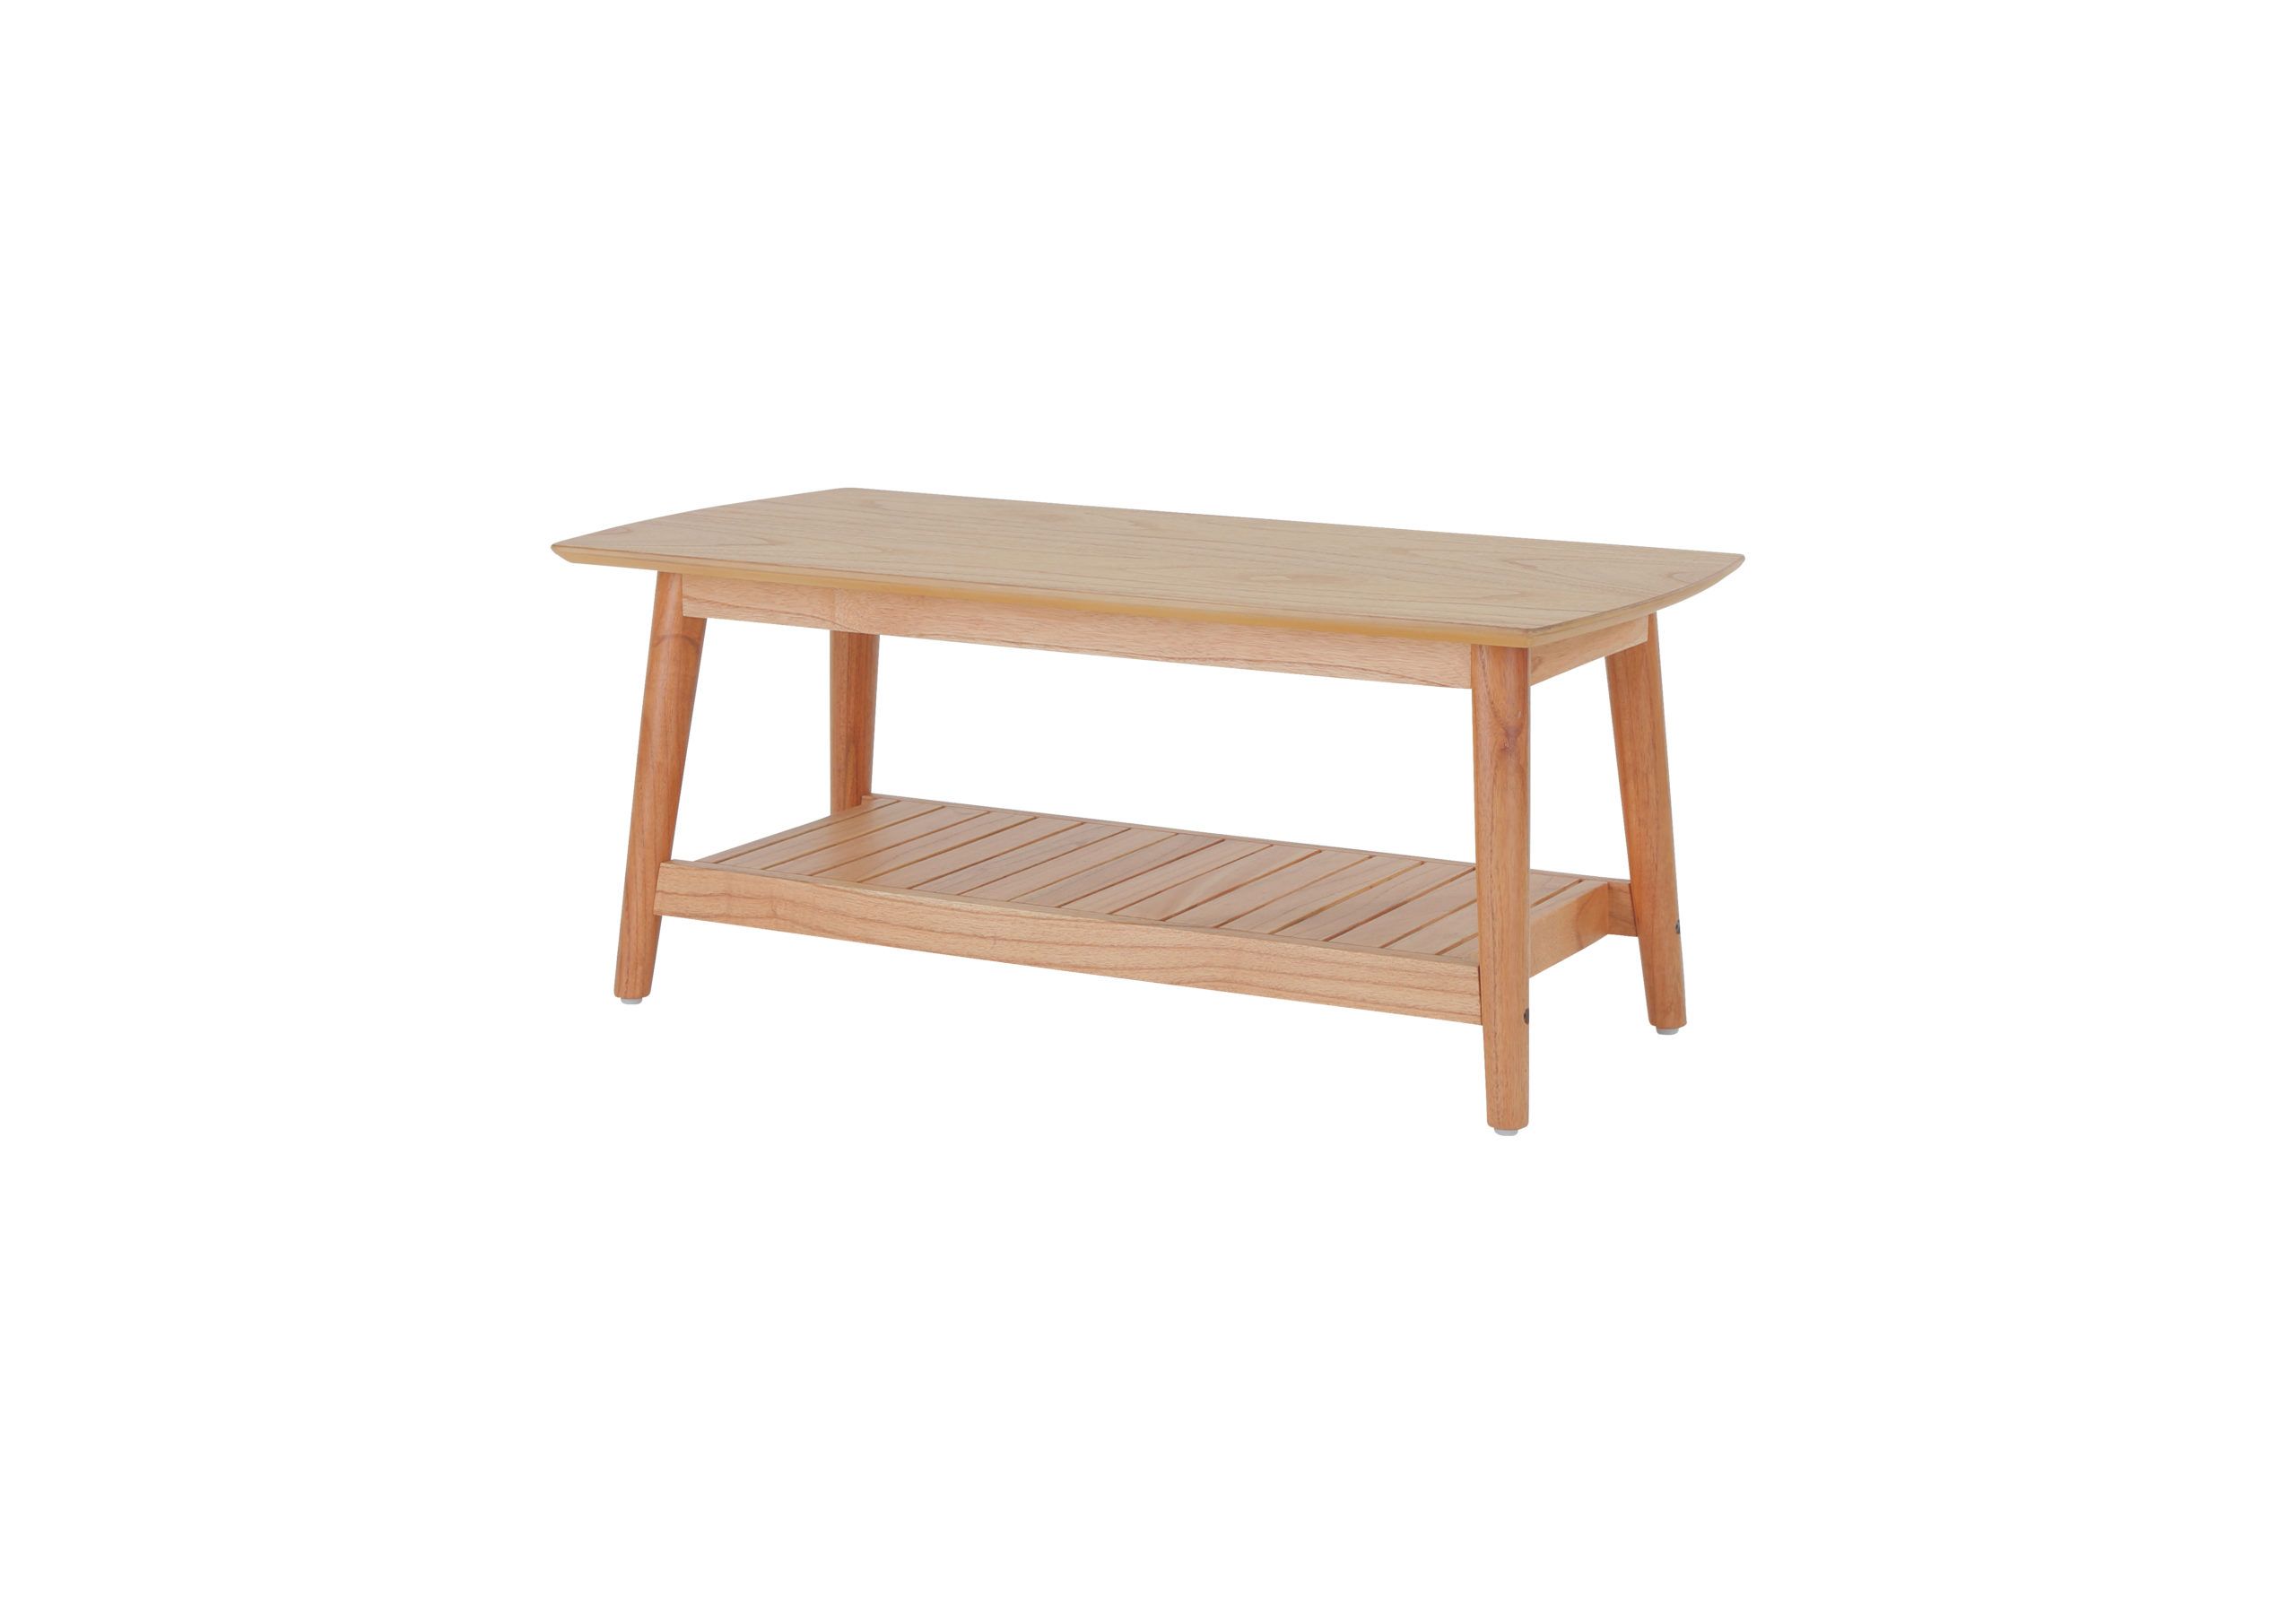 Kayu Coffee Table With Shelf – Daro Cane Furniture Within Most Up To Date Coffee Tables With Shelf (View 17 of 20)